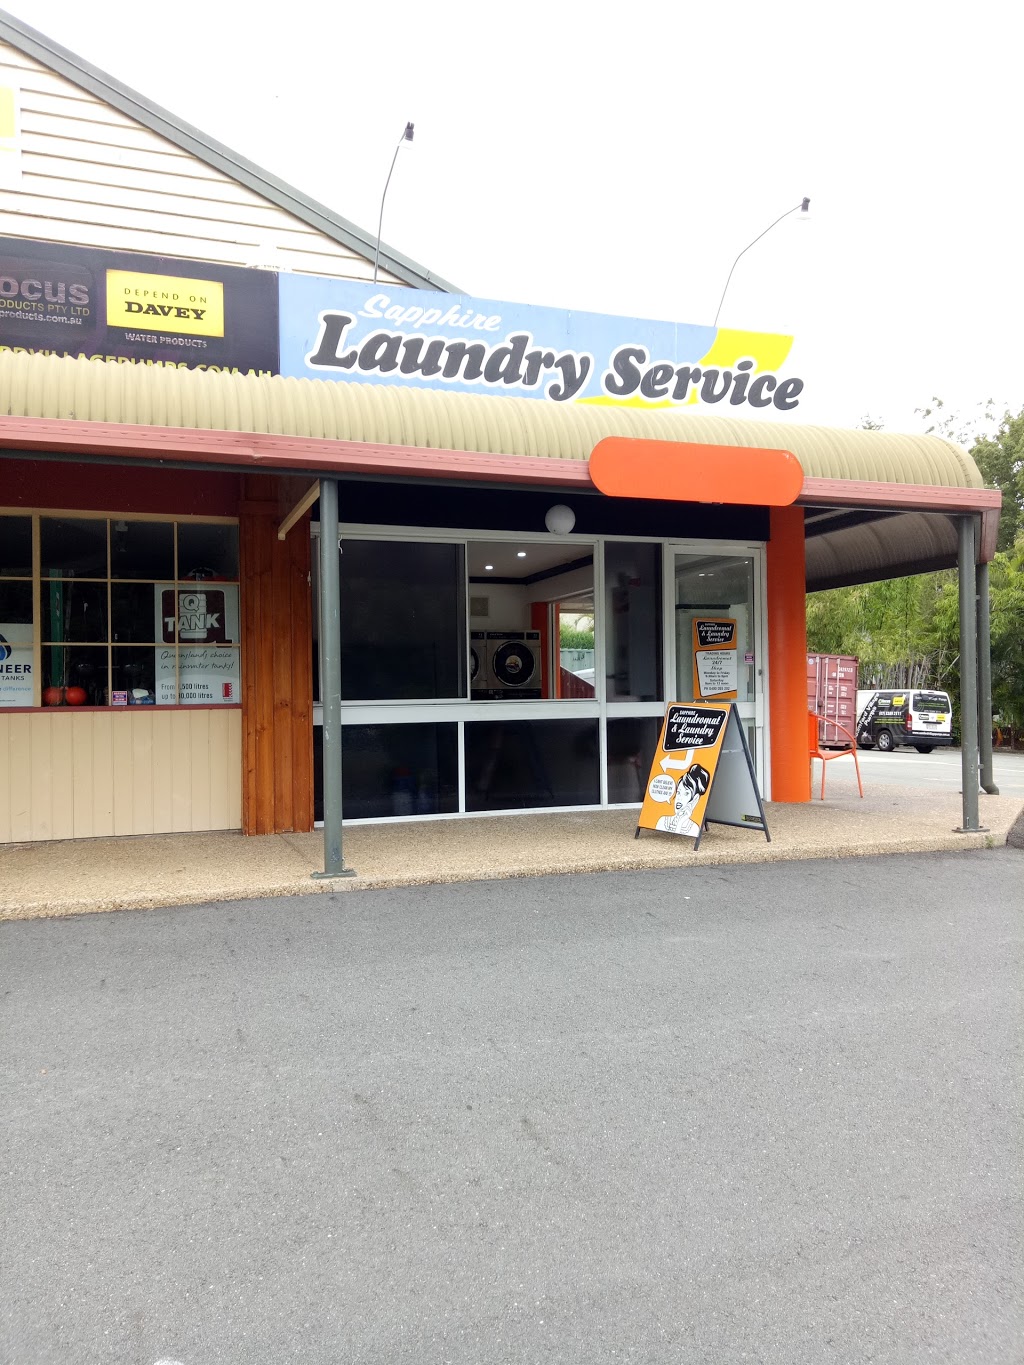 Sapphire Laundromat & Laundry Service | 7/39 Main St, Samford QLD 4520, Australia | Phone: 0409 997 955